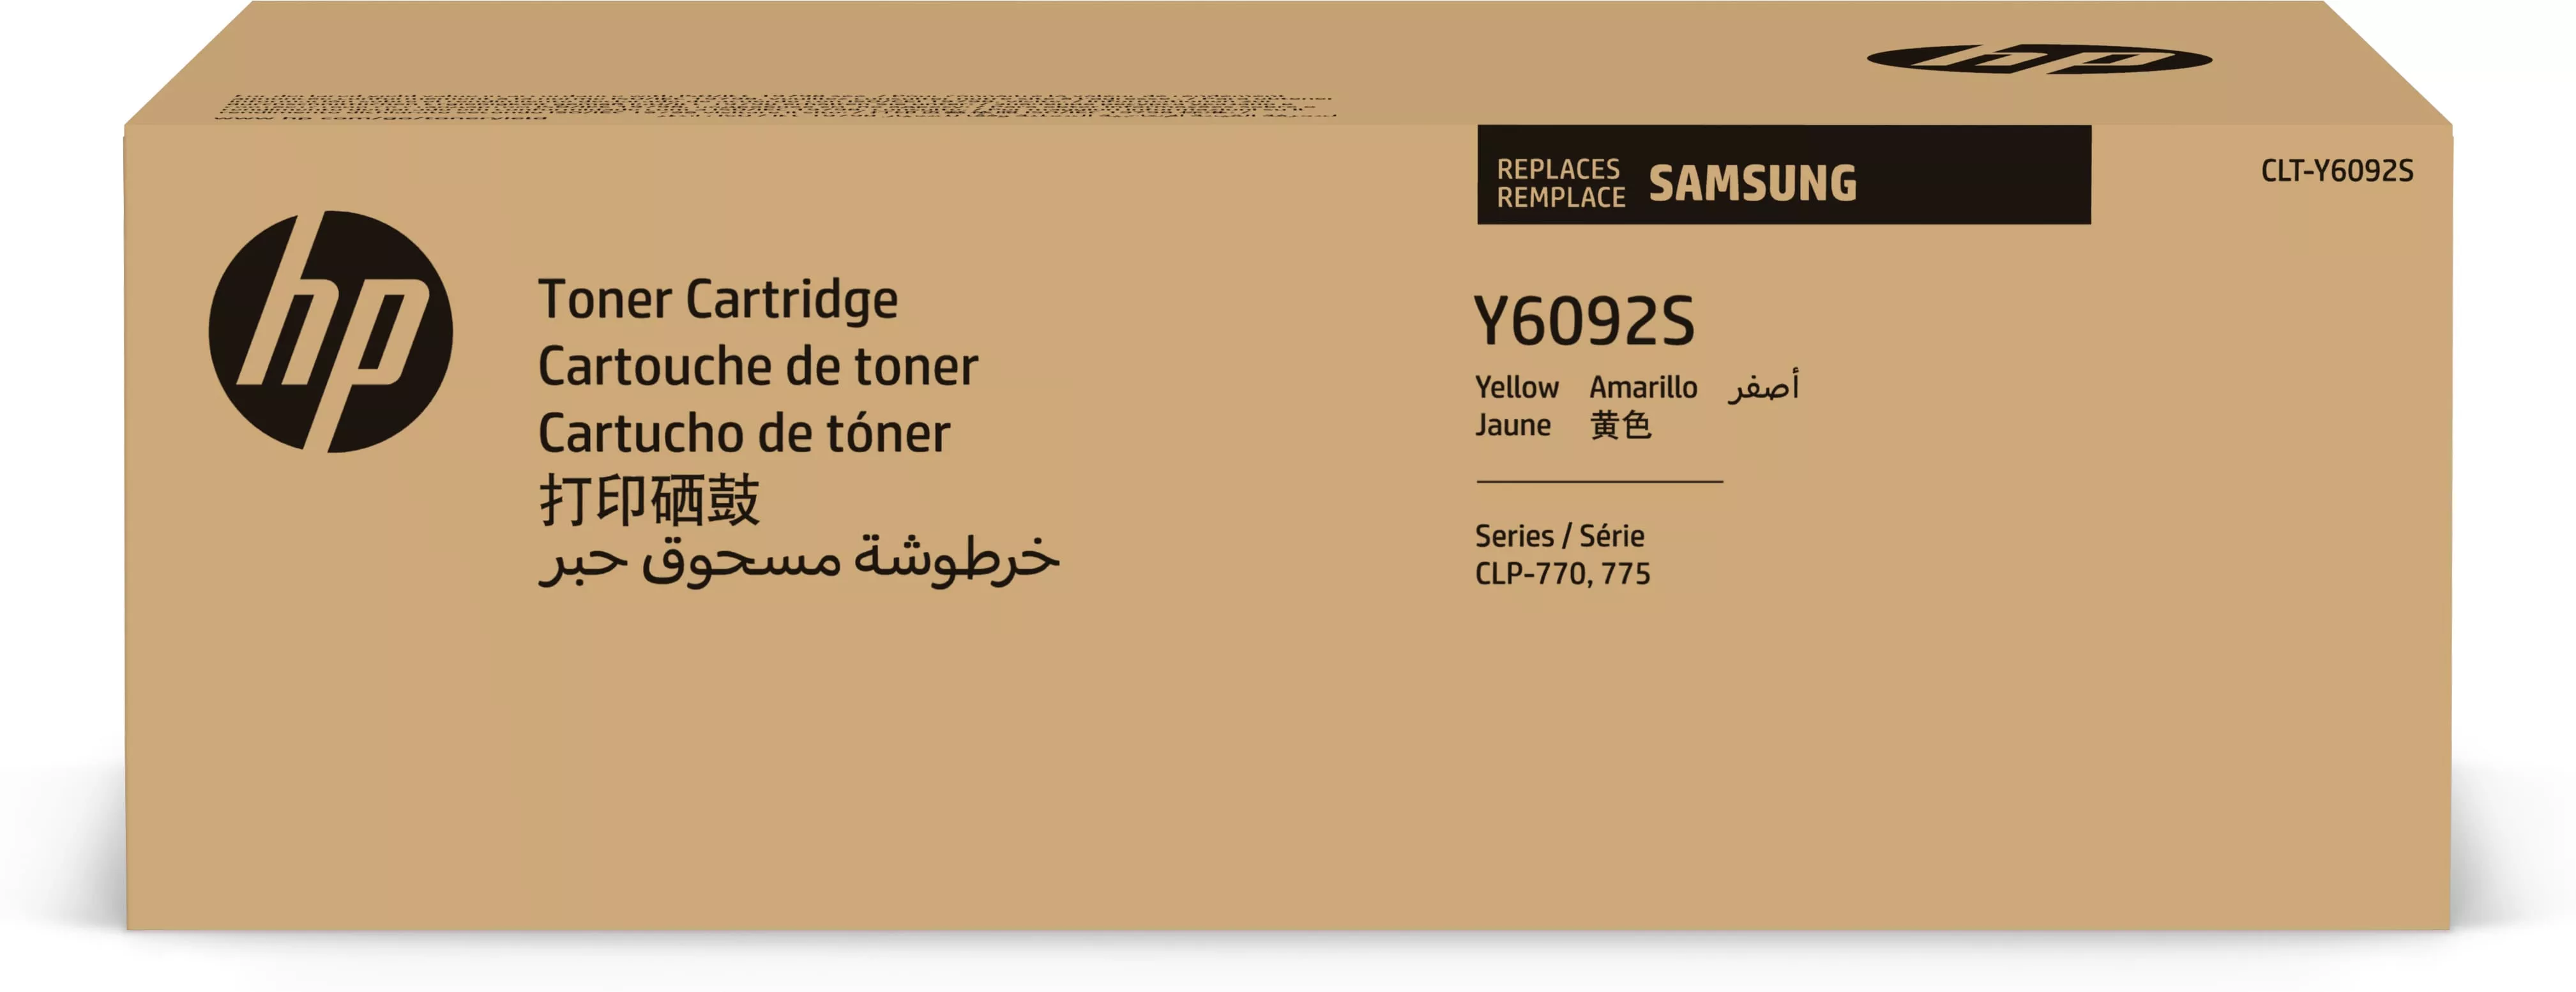 Vente SAMSUNG original Toner cartridge LT-Y6092S/ELS Yellow HP au meilleur prix - visuel 2